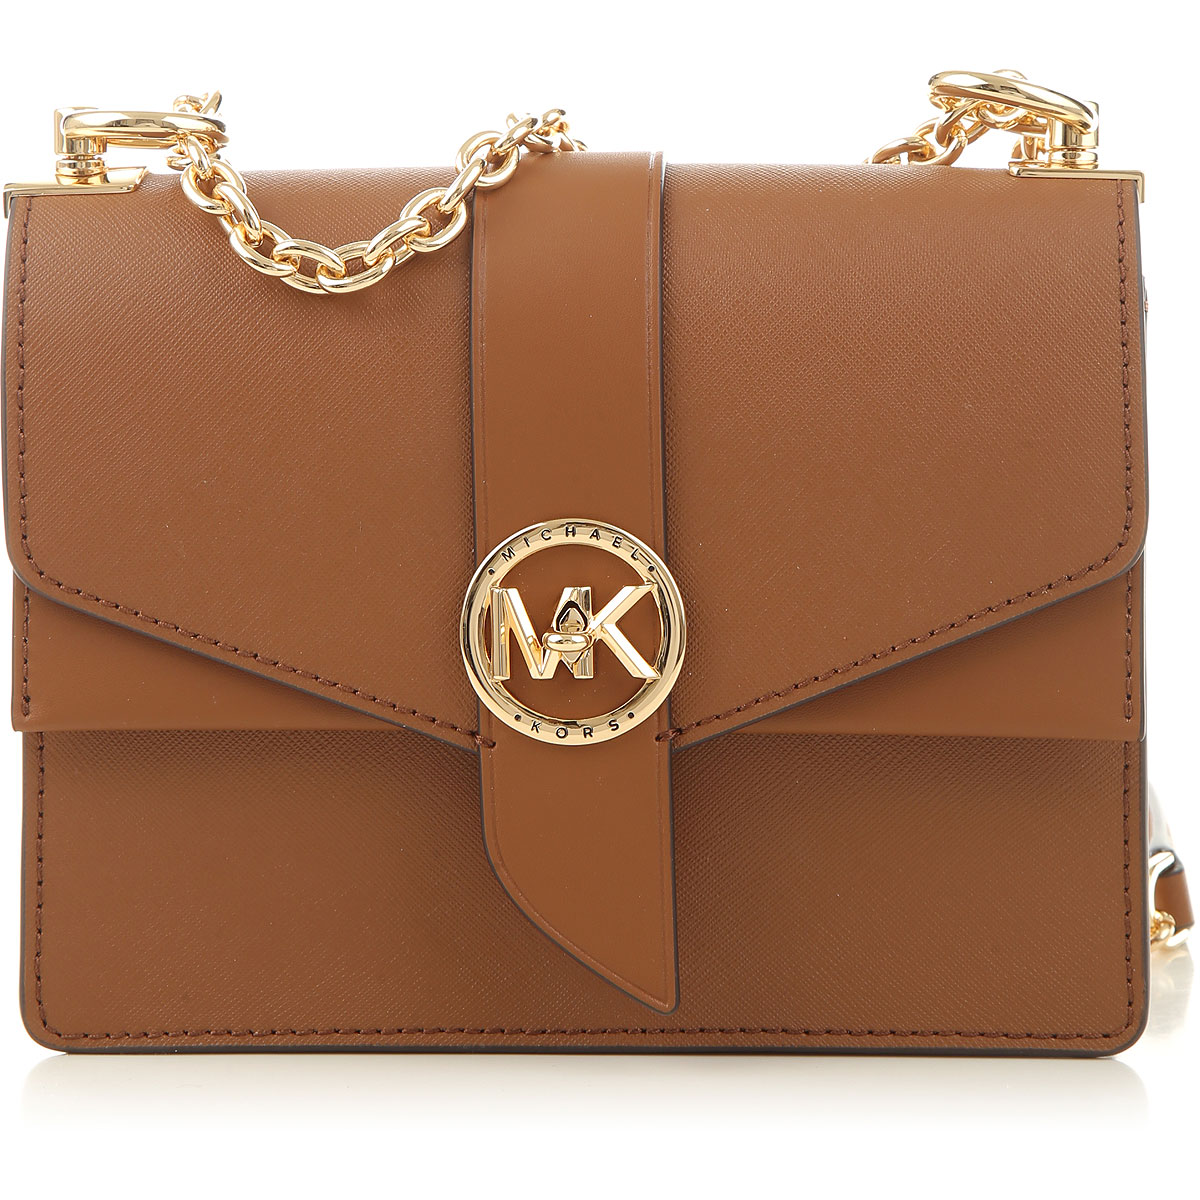 Handbags Michael Kors, Style code: 32s1ggrc0l-luggage-